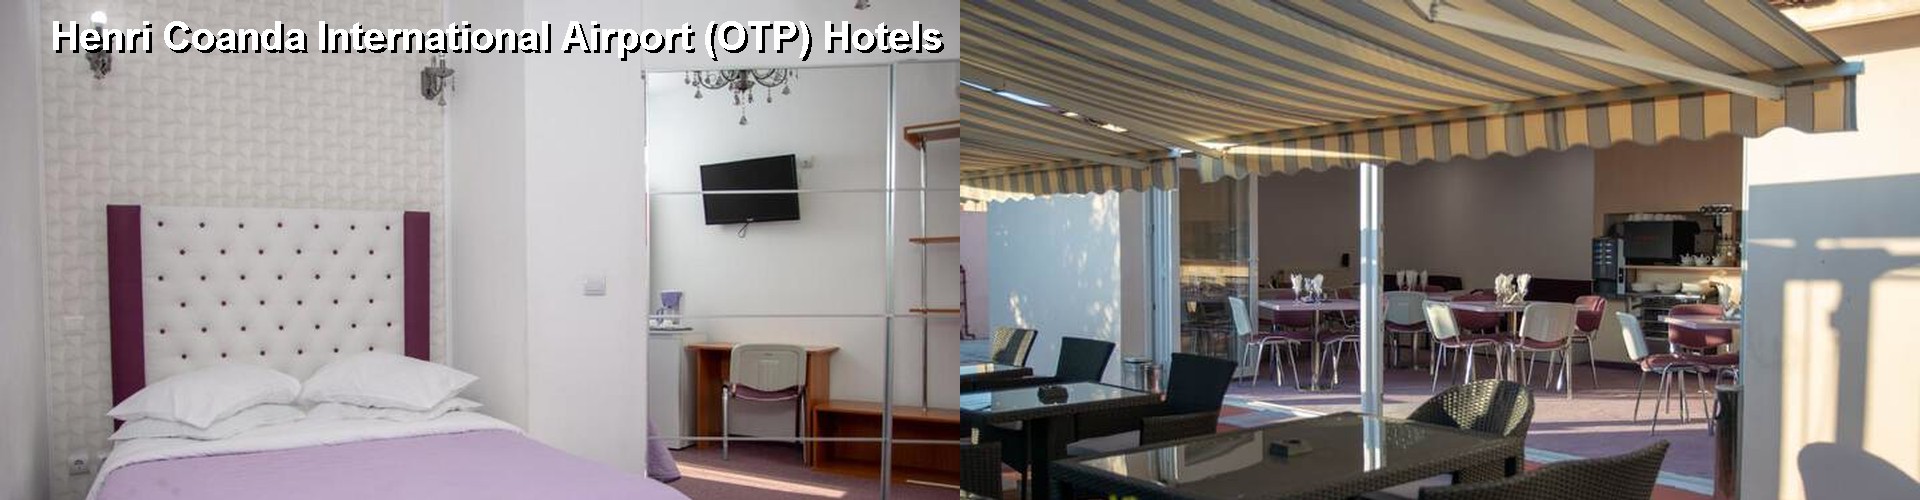 5 Best Hotels near Henri Coanda International Airport (OTP)